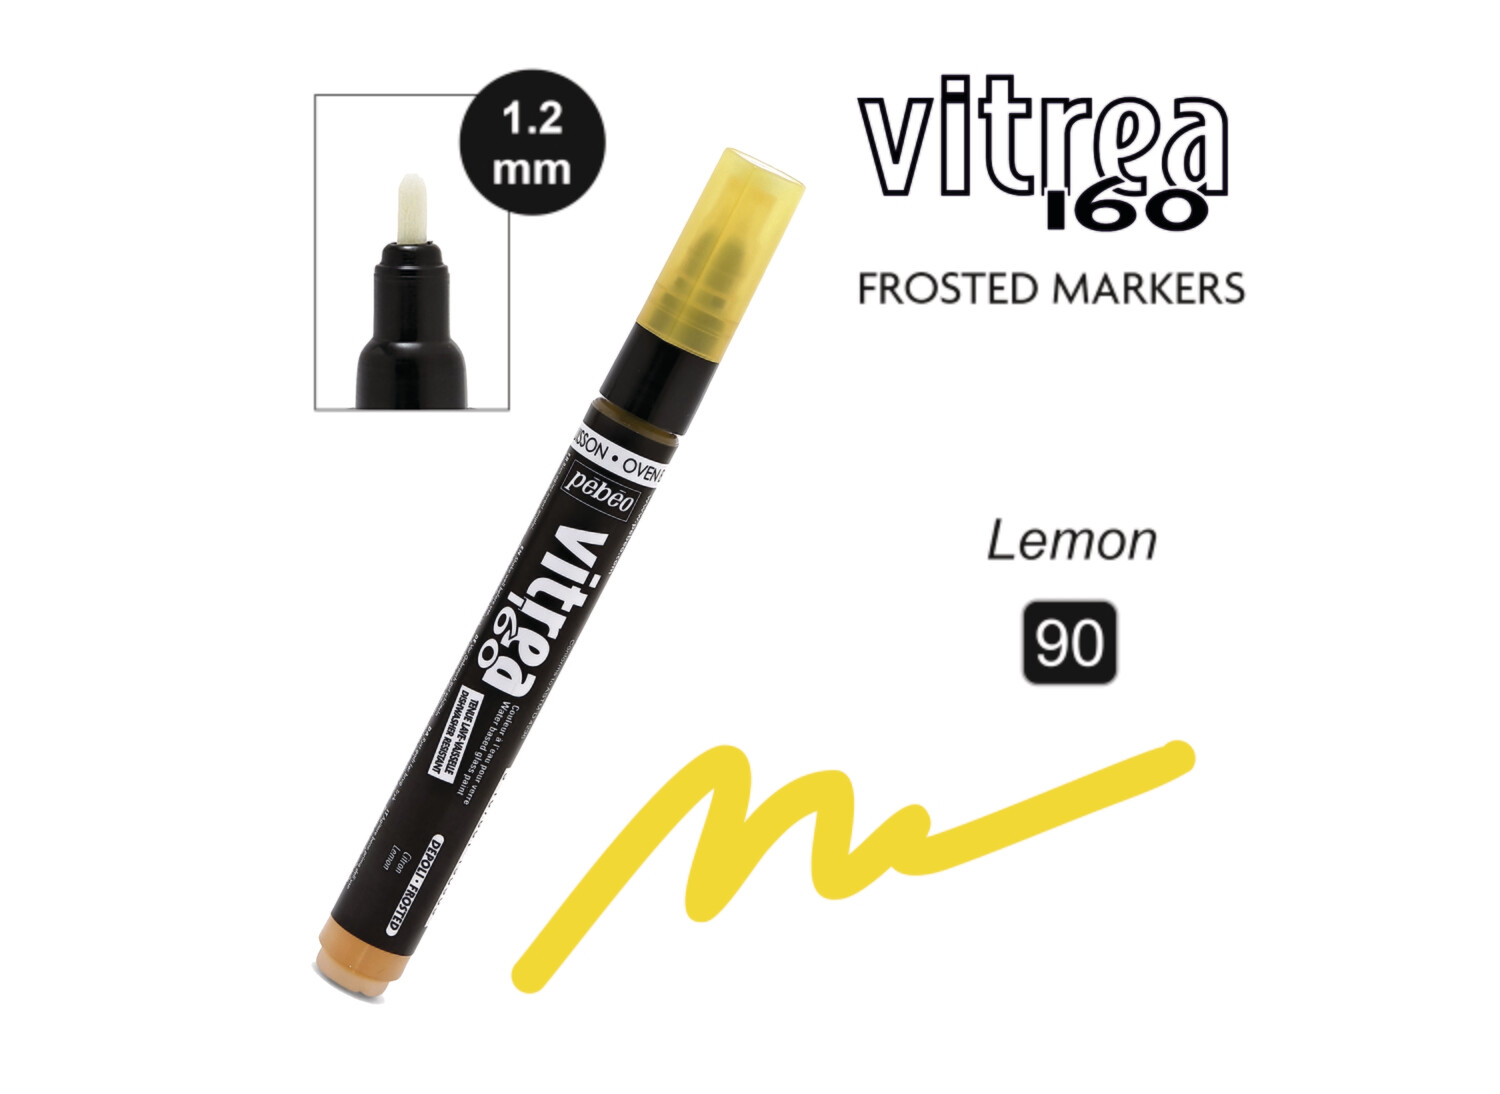 Vitrea-160 Frosted Marker 90 Citron